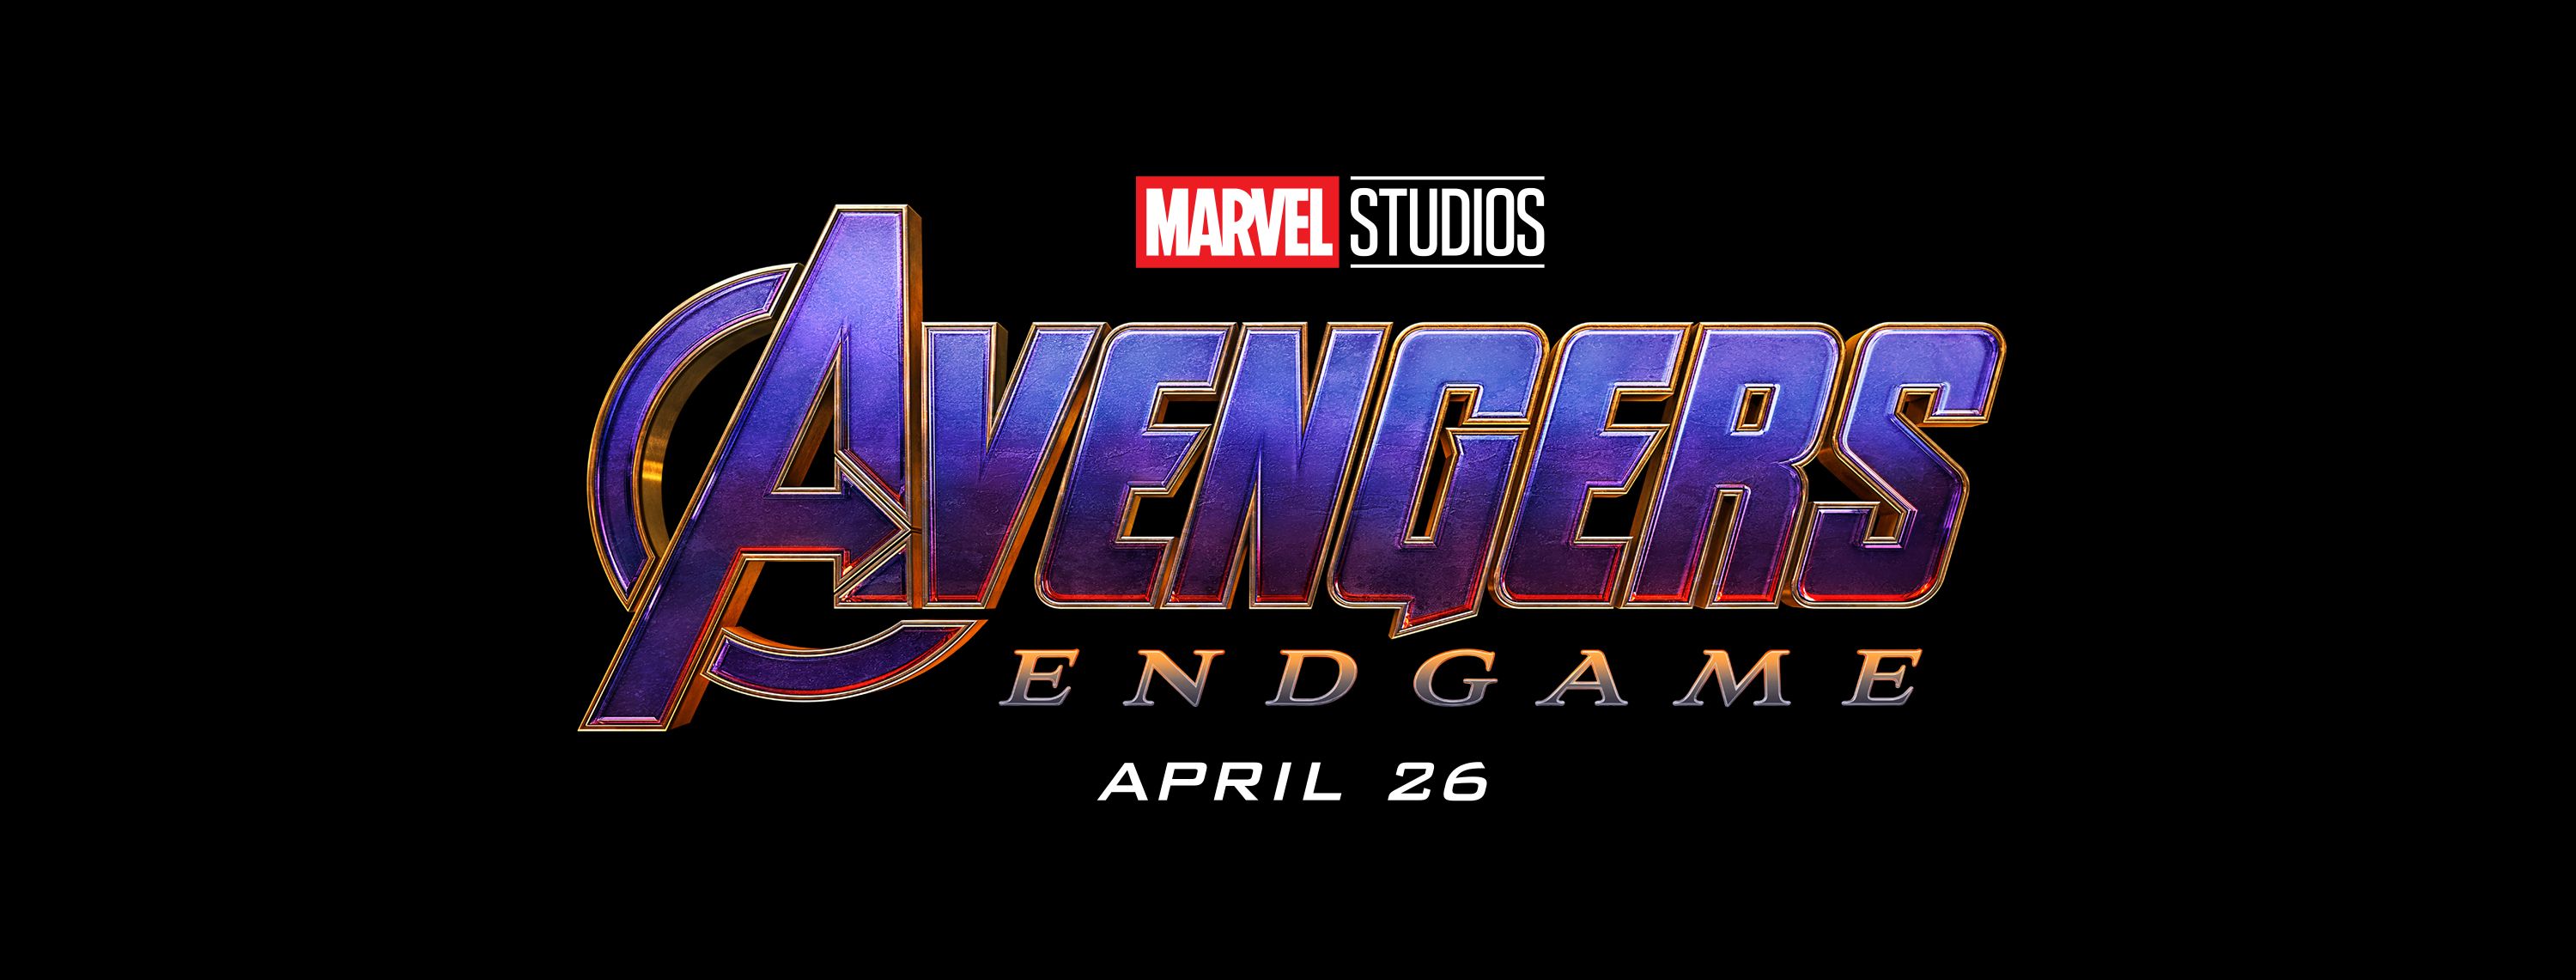 Avengers Endgame Facebook page logo